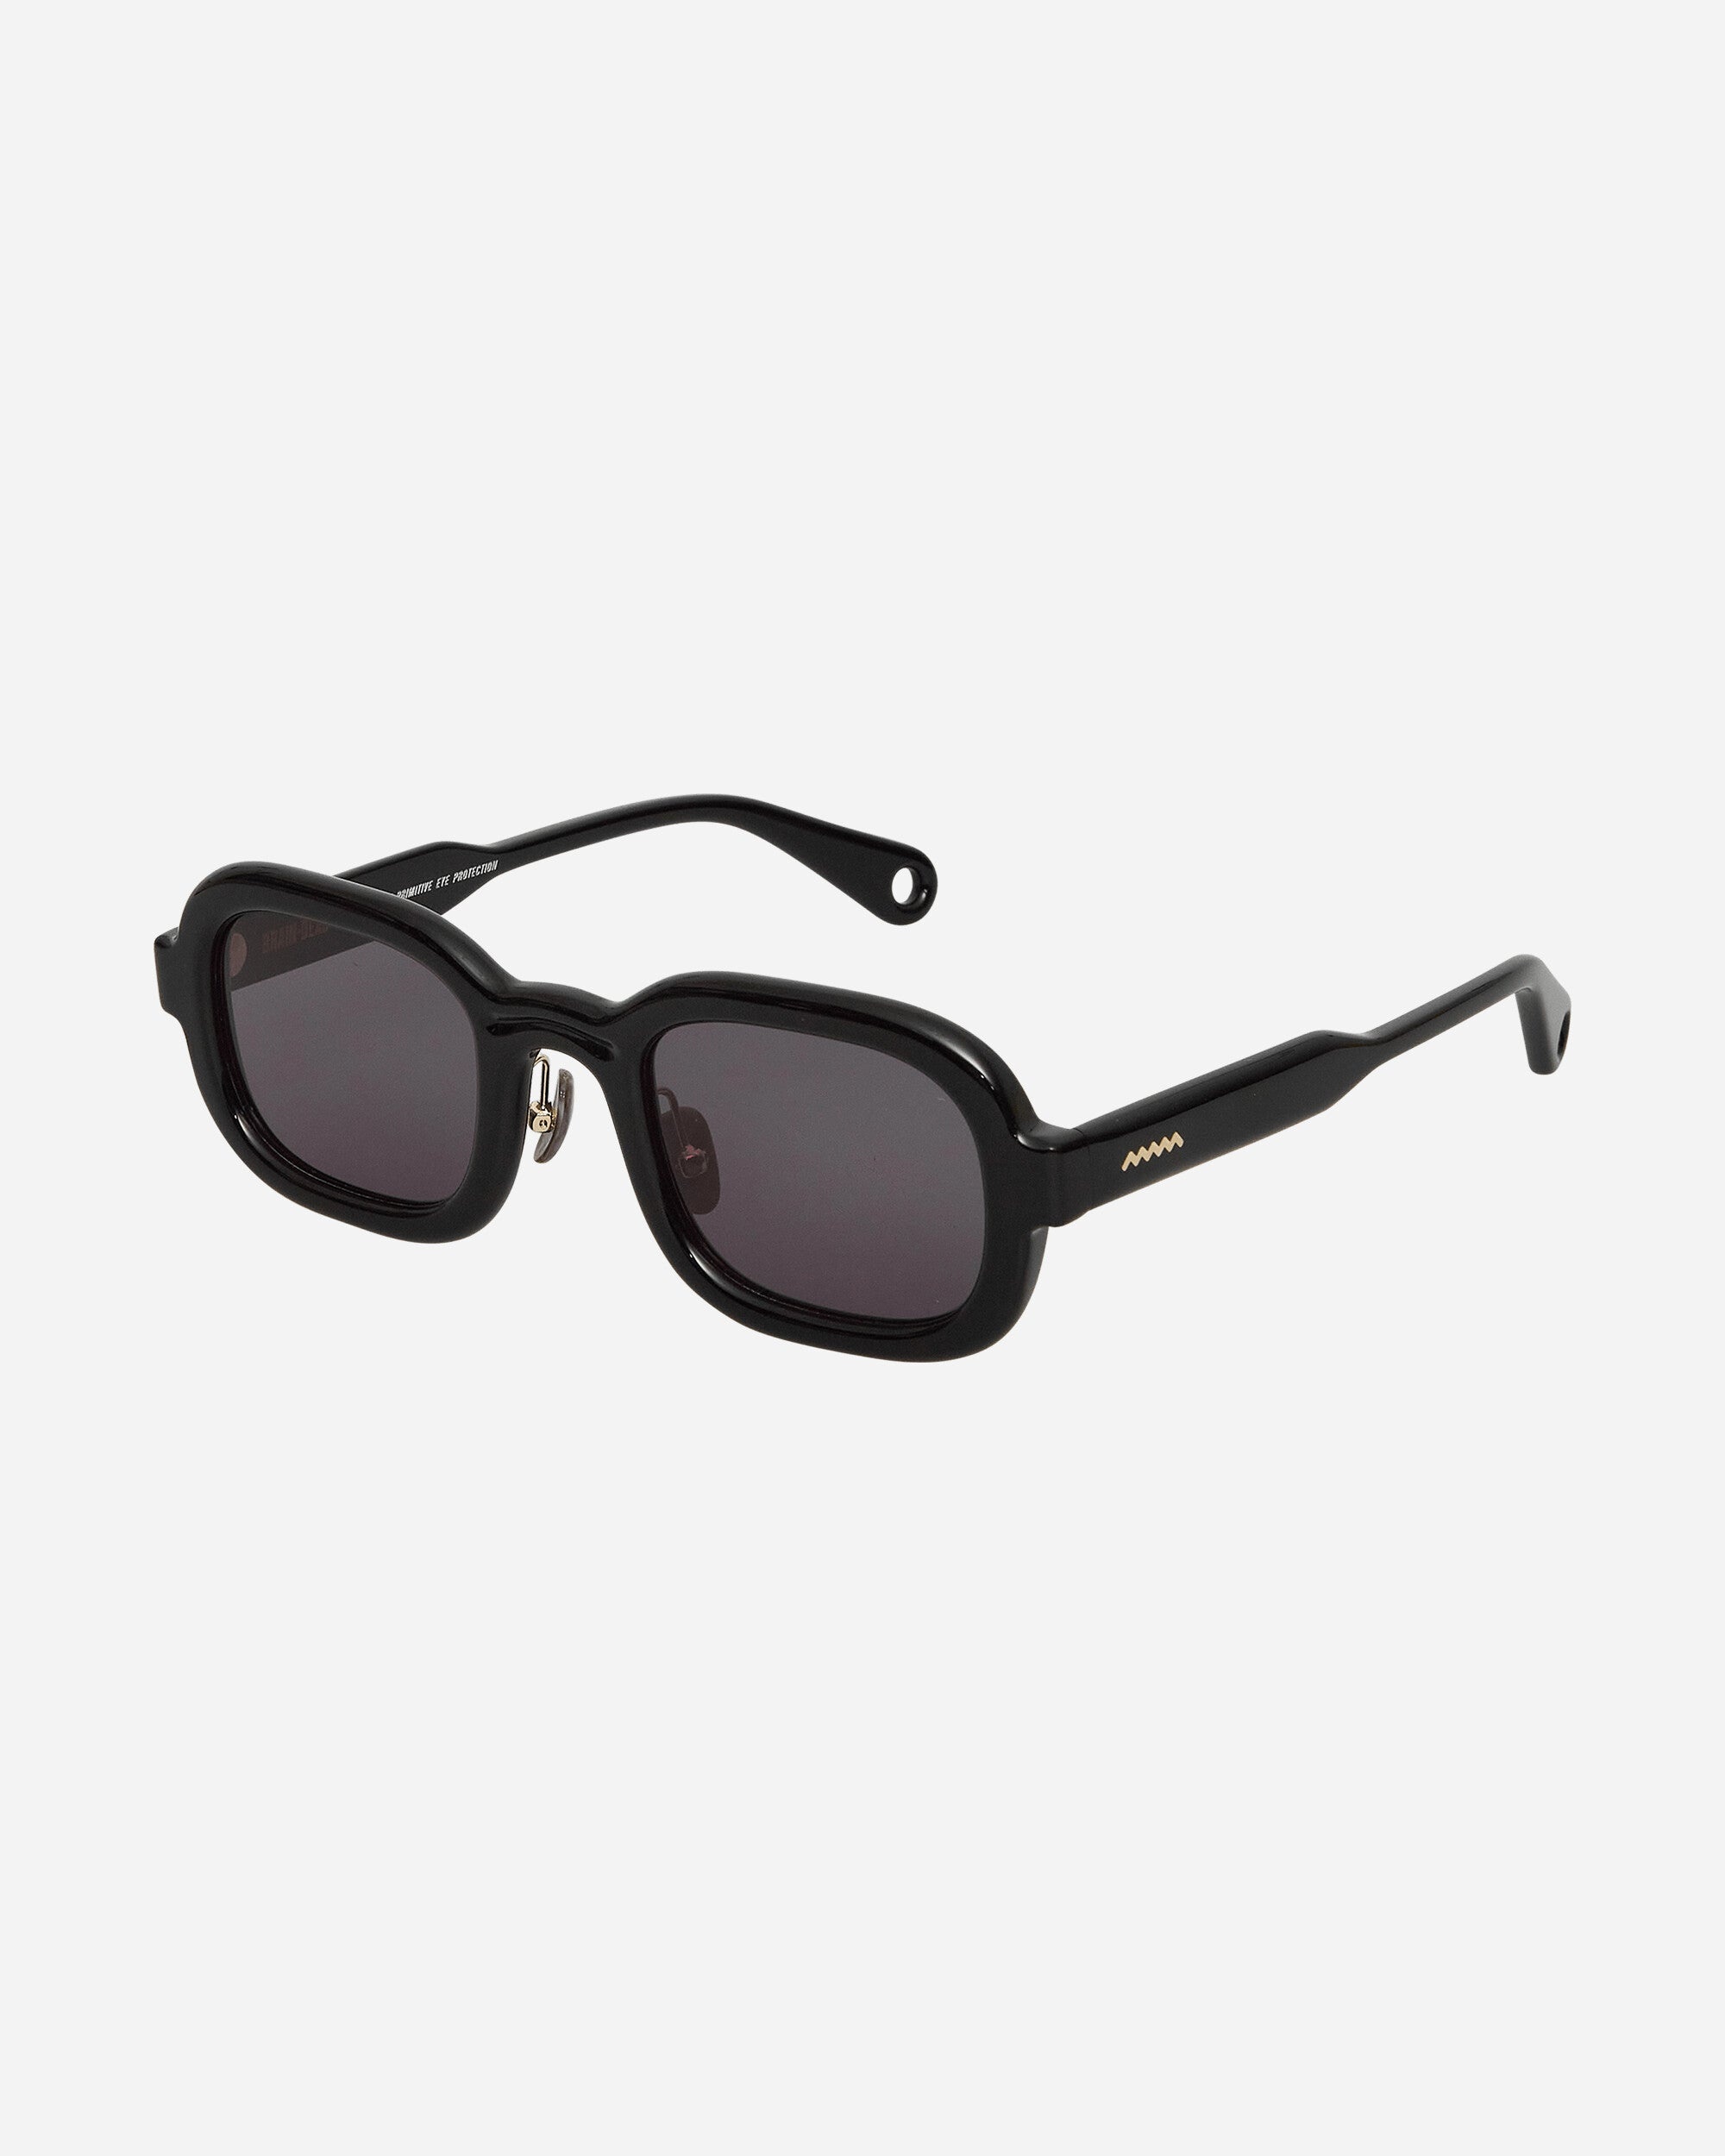 Newman Post Modern Primitive Eye Protection Sunglasses Black - 3